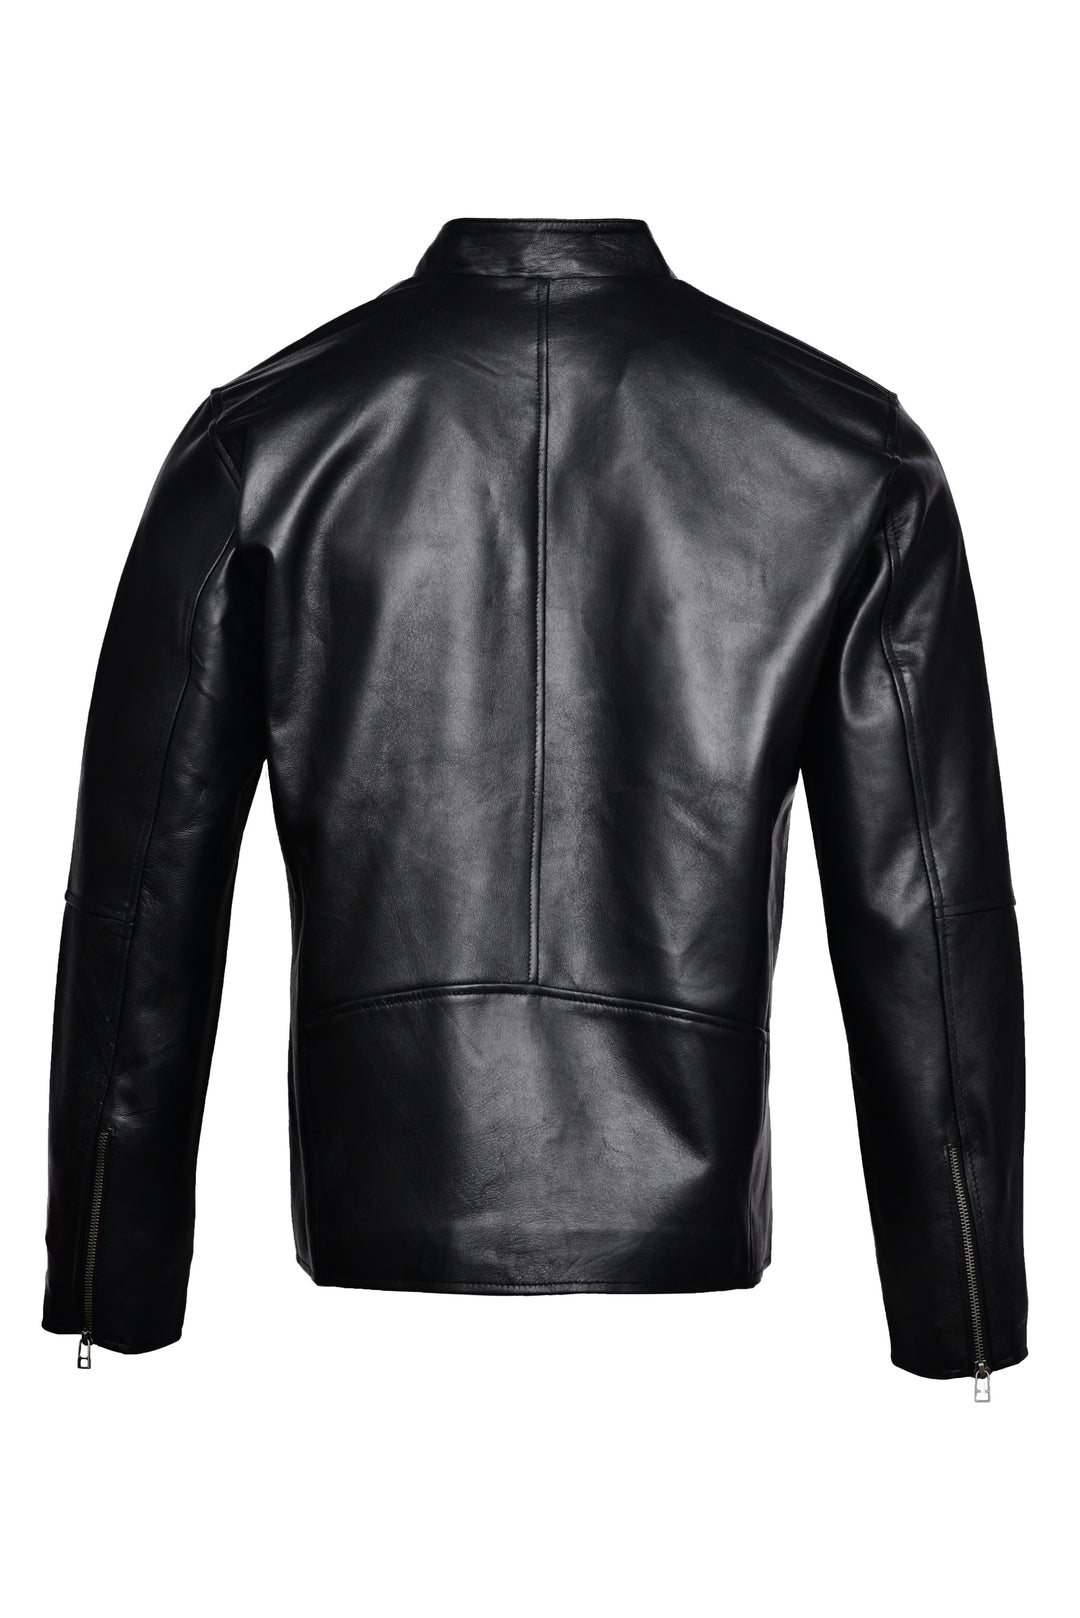 Casual and Comfortable Sheepskin Leather Jacket | Men | Sheepskin ...